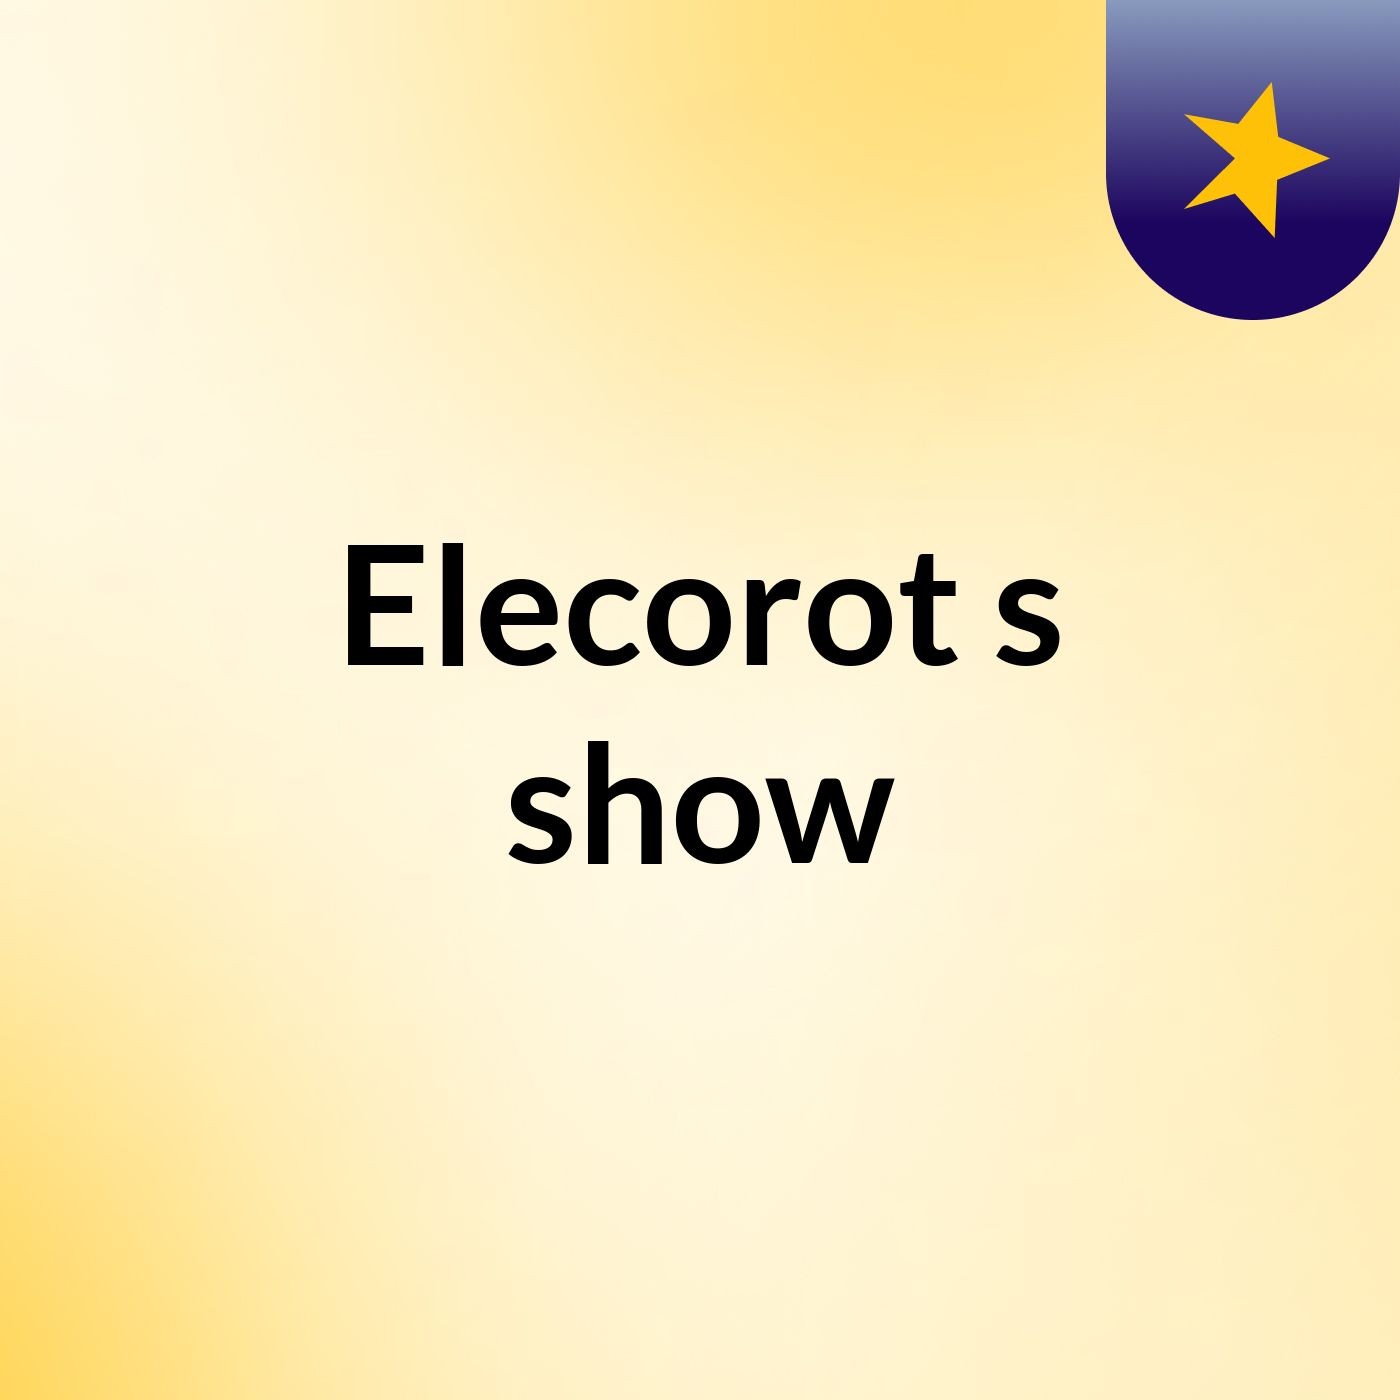 Elecorot's show